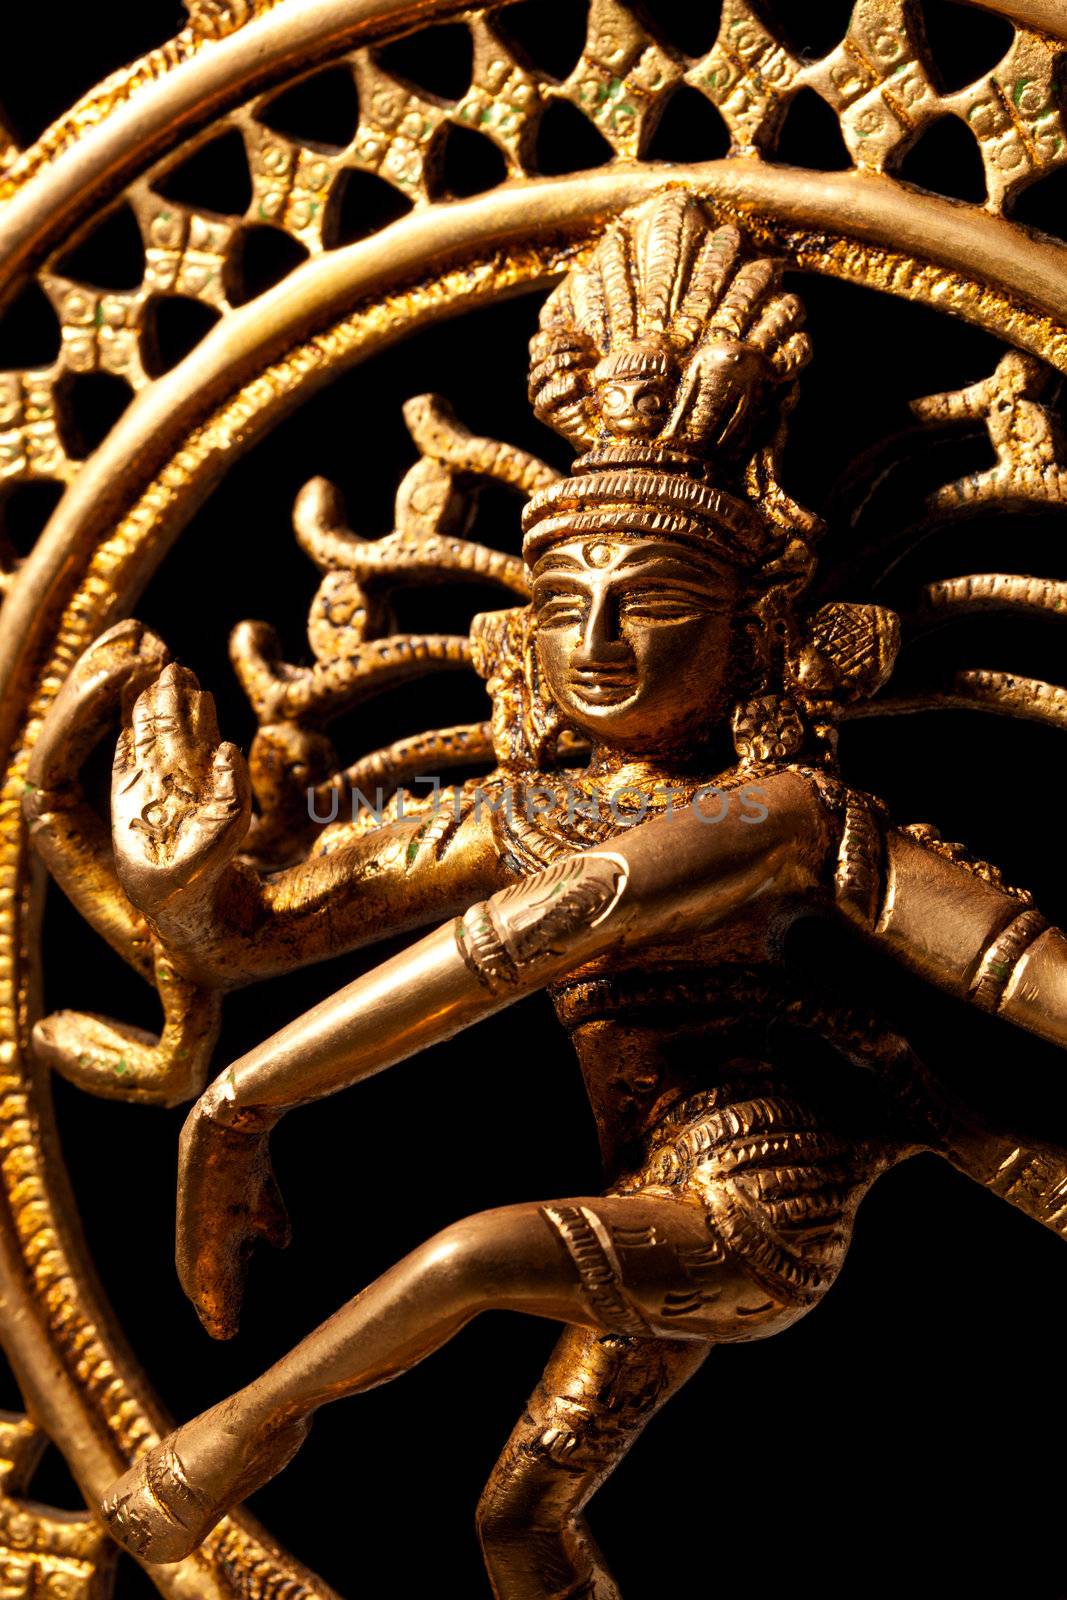 Statue of indian hindu god Shiva Nataraja - Lord of Dance by dimol